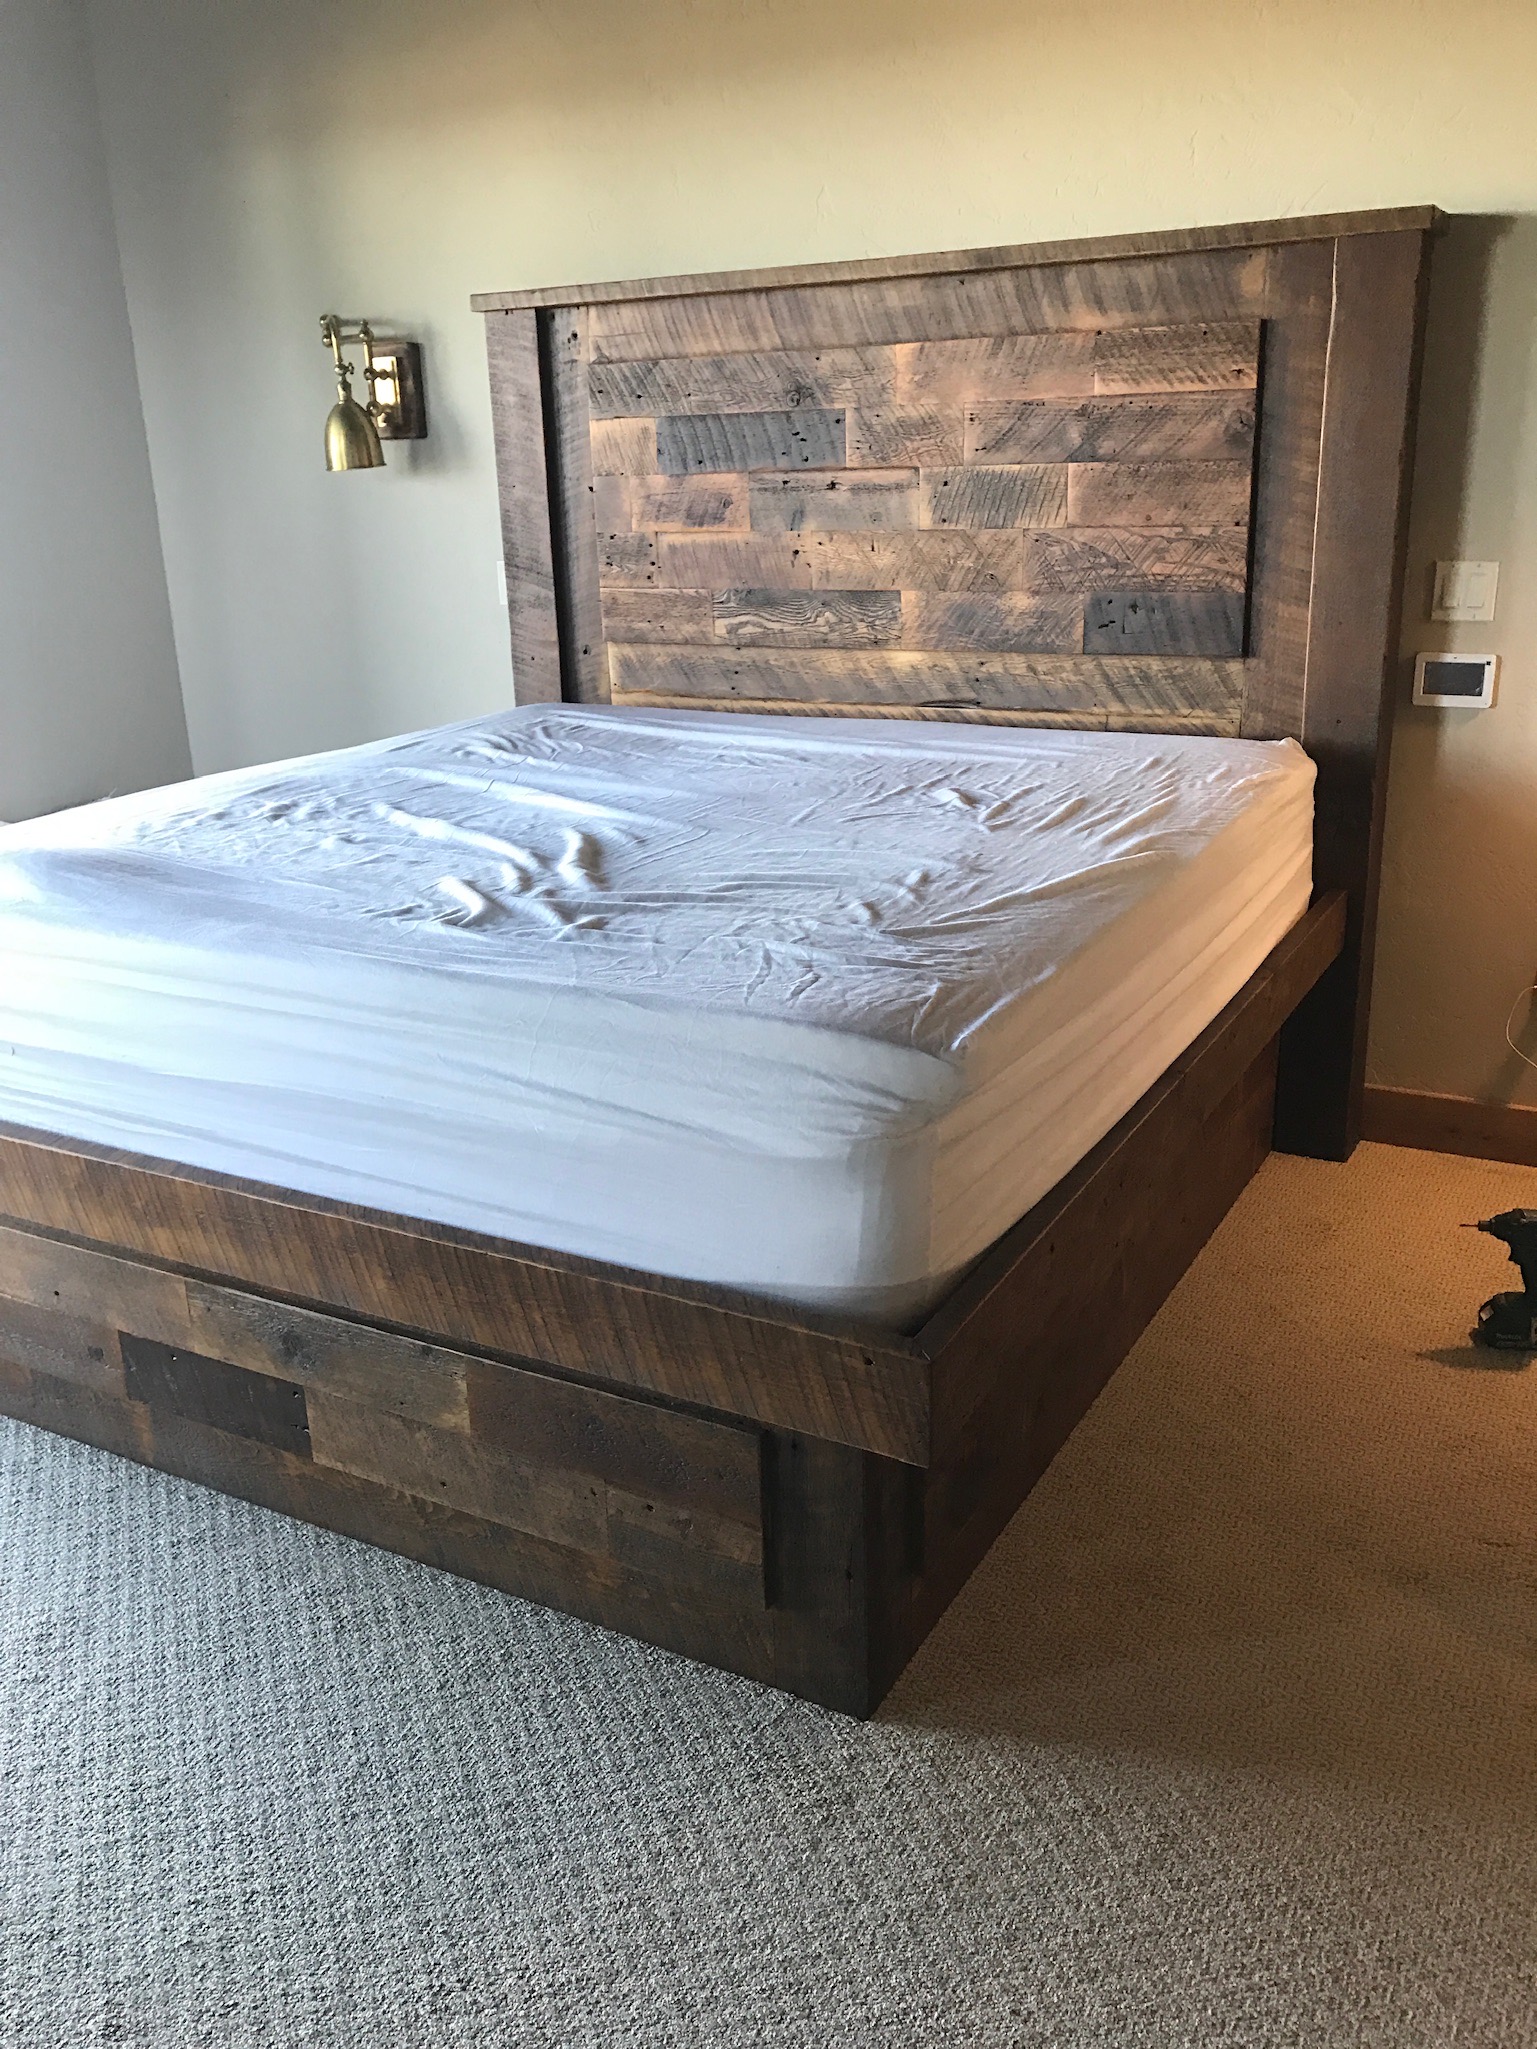 Reclaimed wood king bed platform and headboard